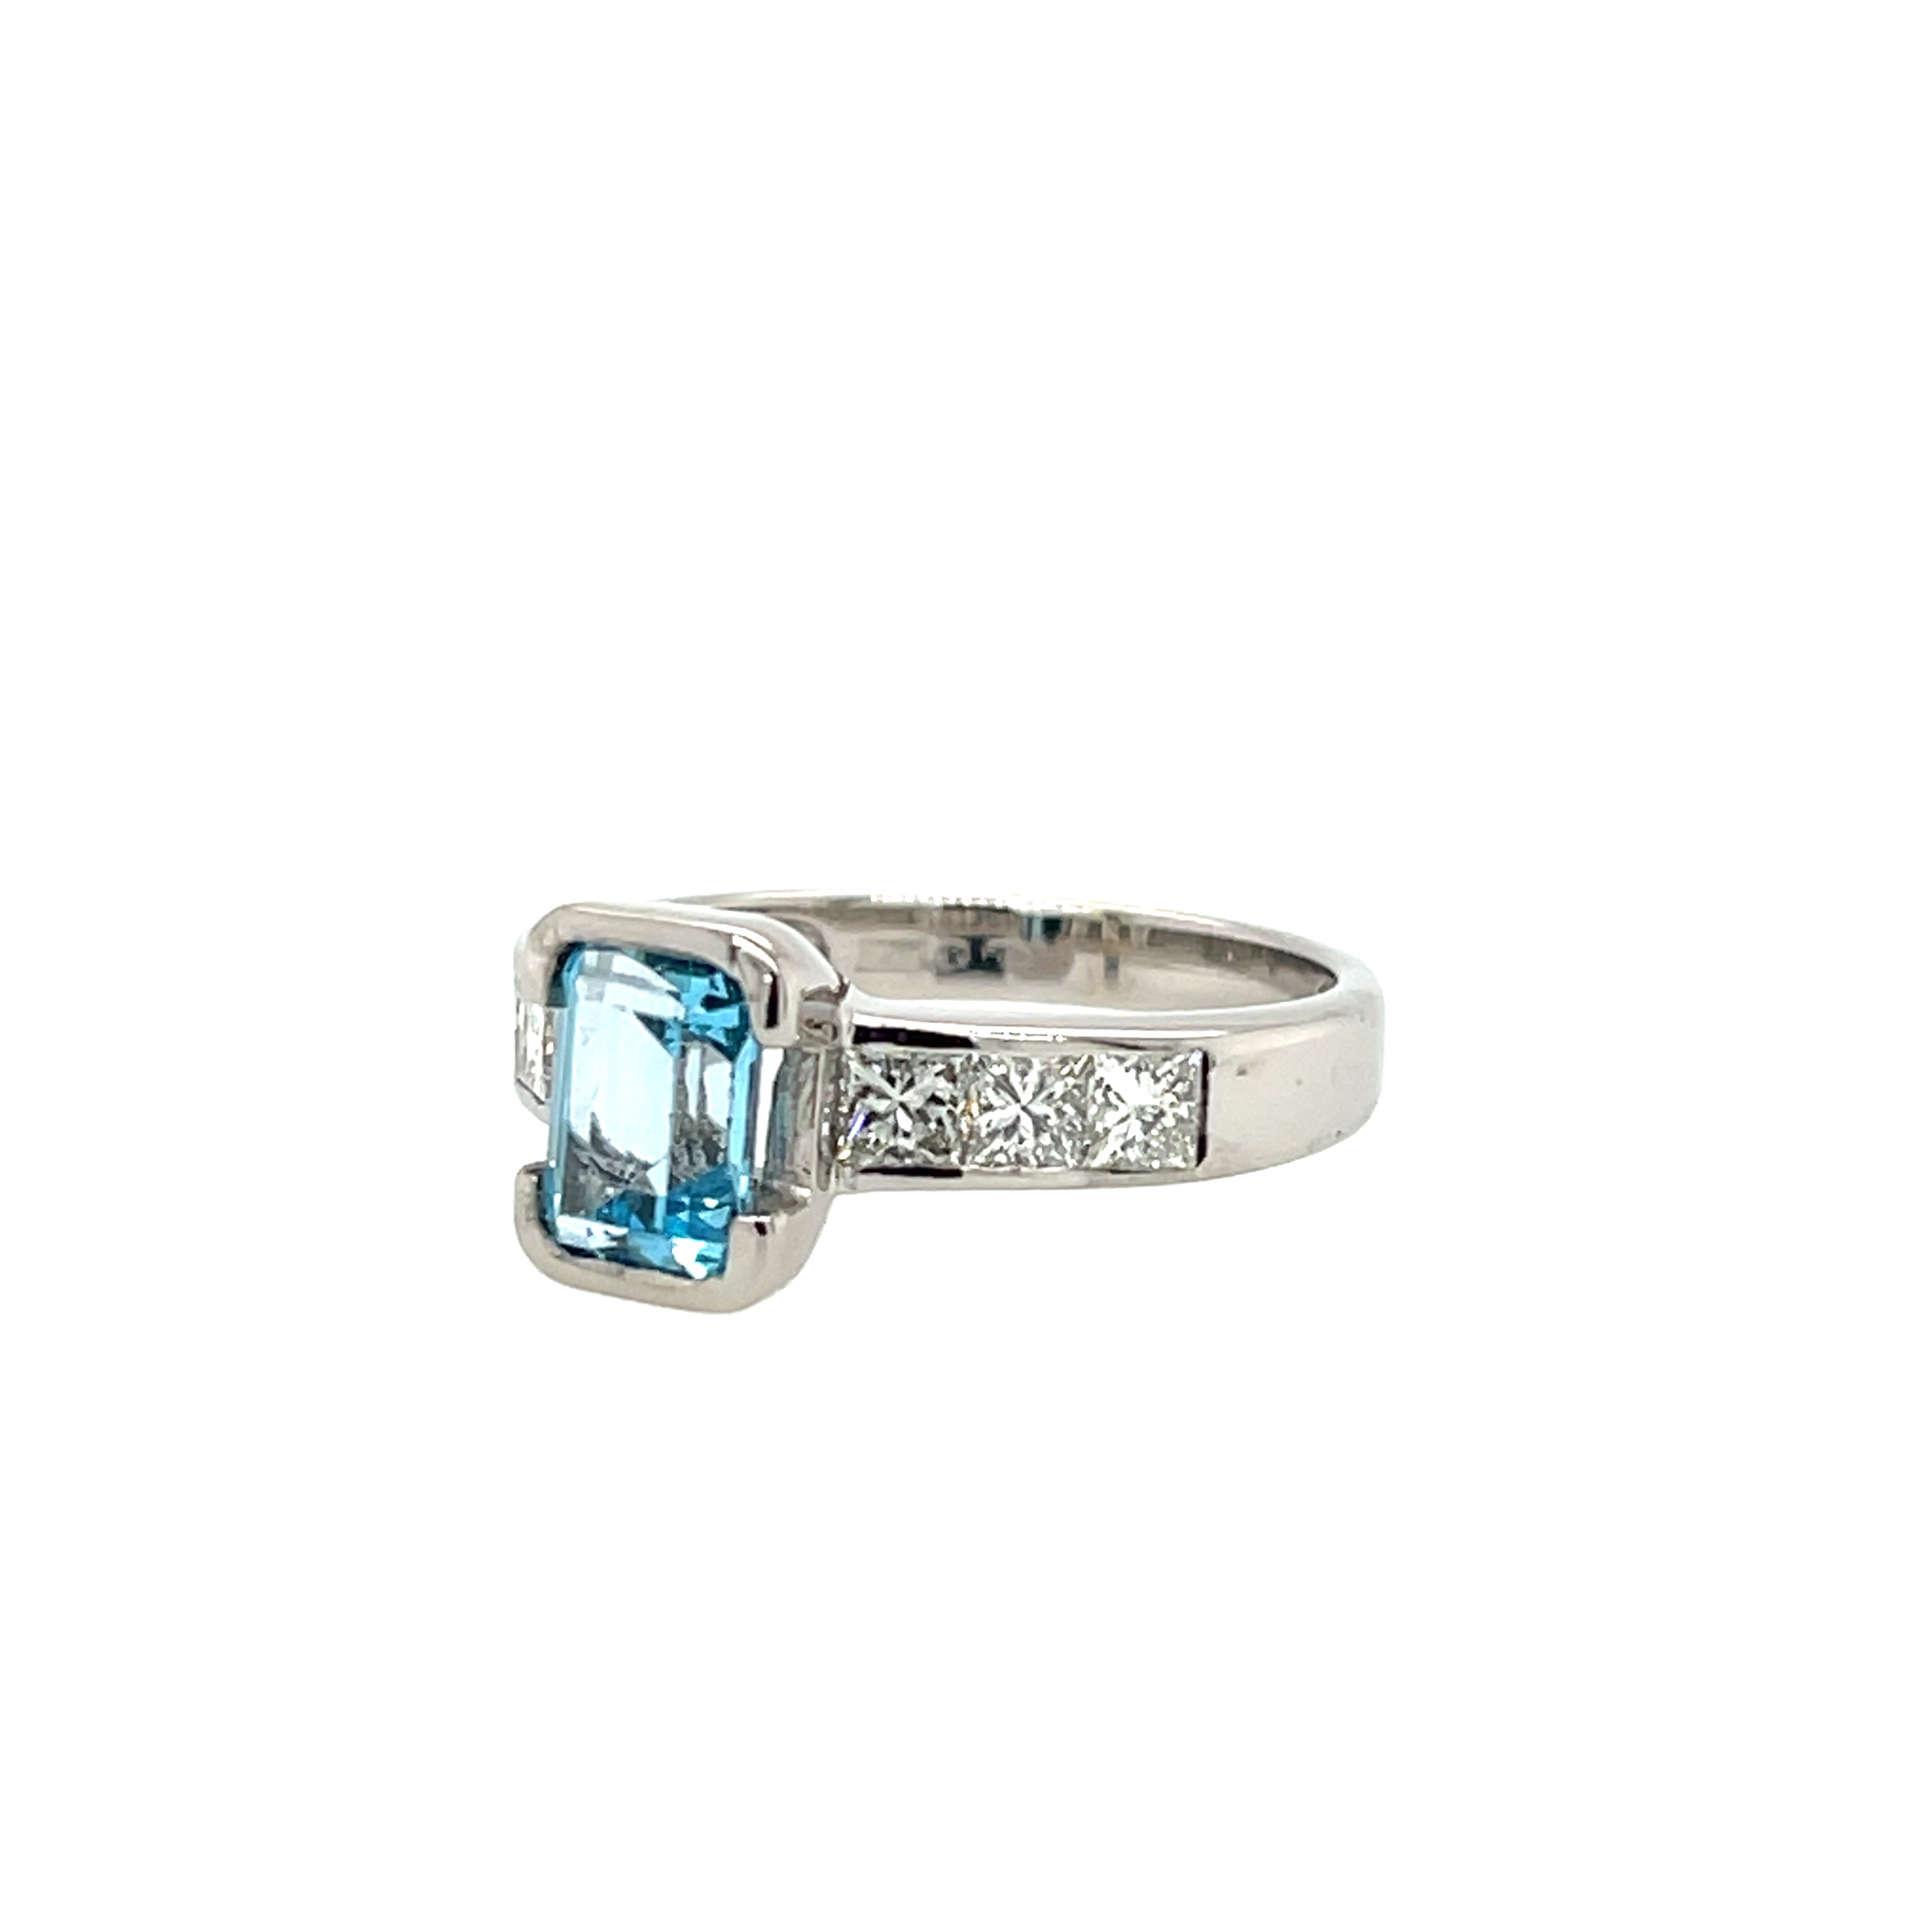 18ct White Gold Aquamarine & Diamond Cocktail Dress Ring